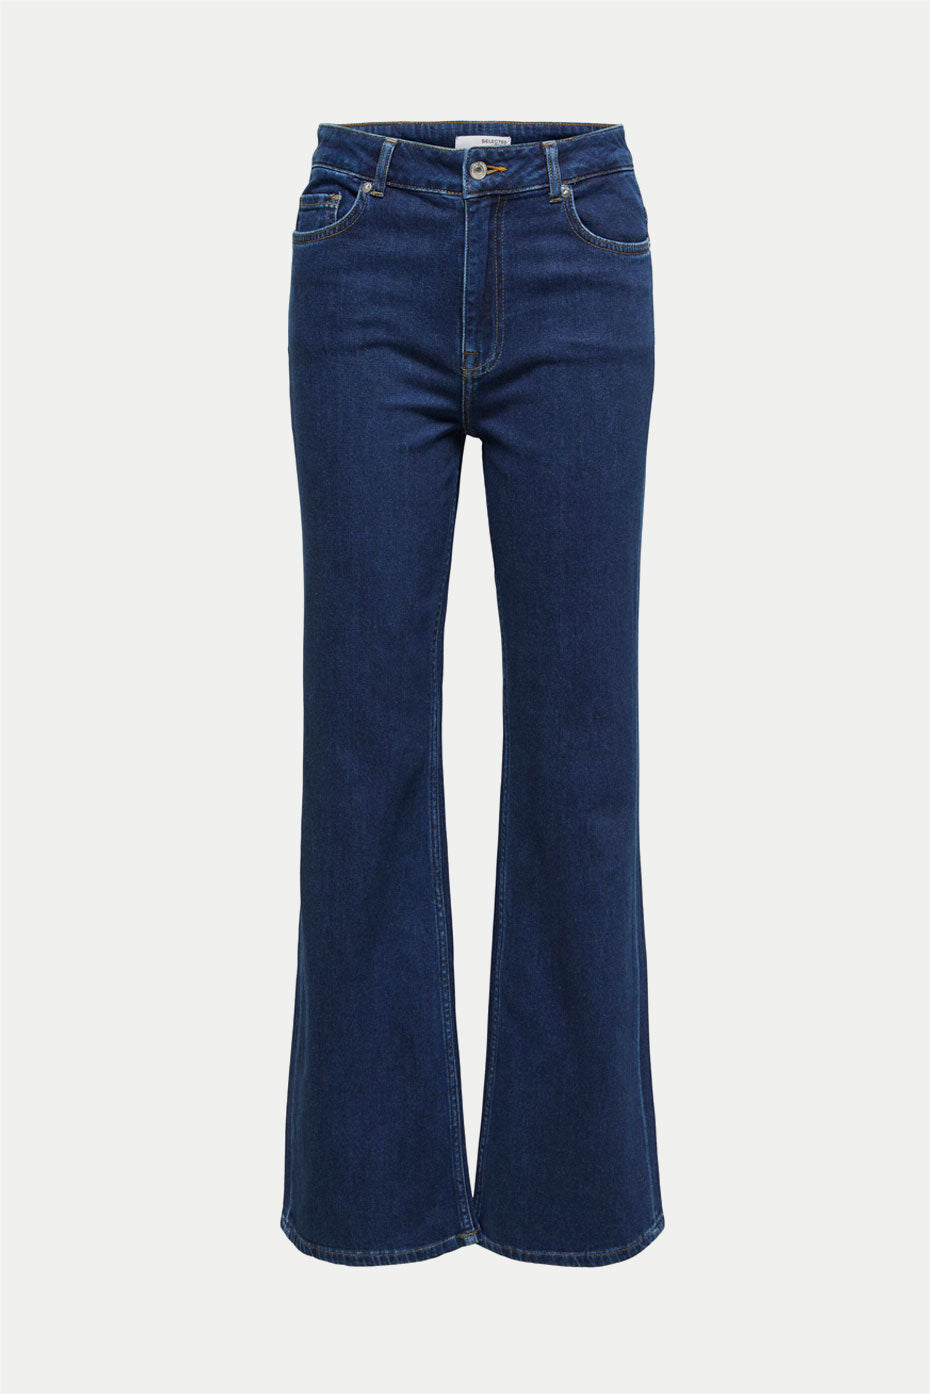 Selected Femme Dark Blue Denim Brigitte Jeans